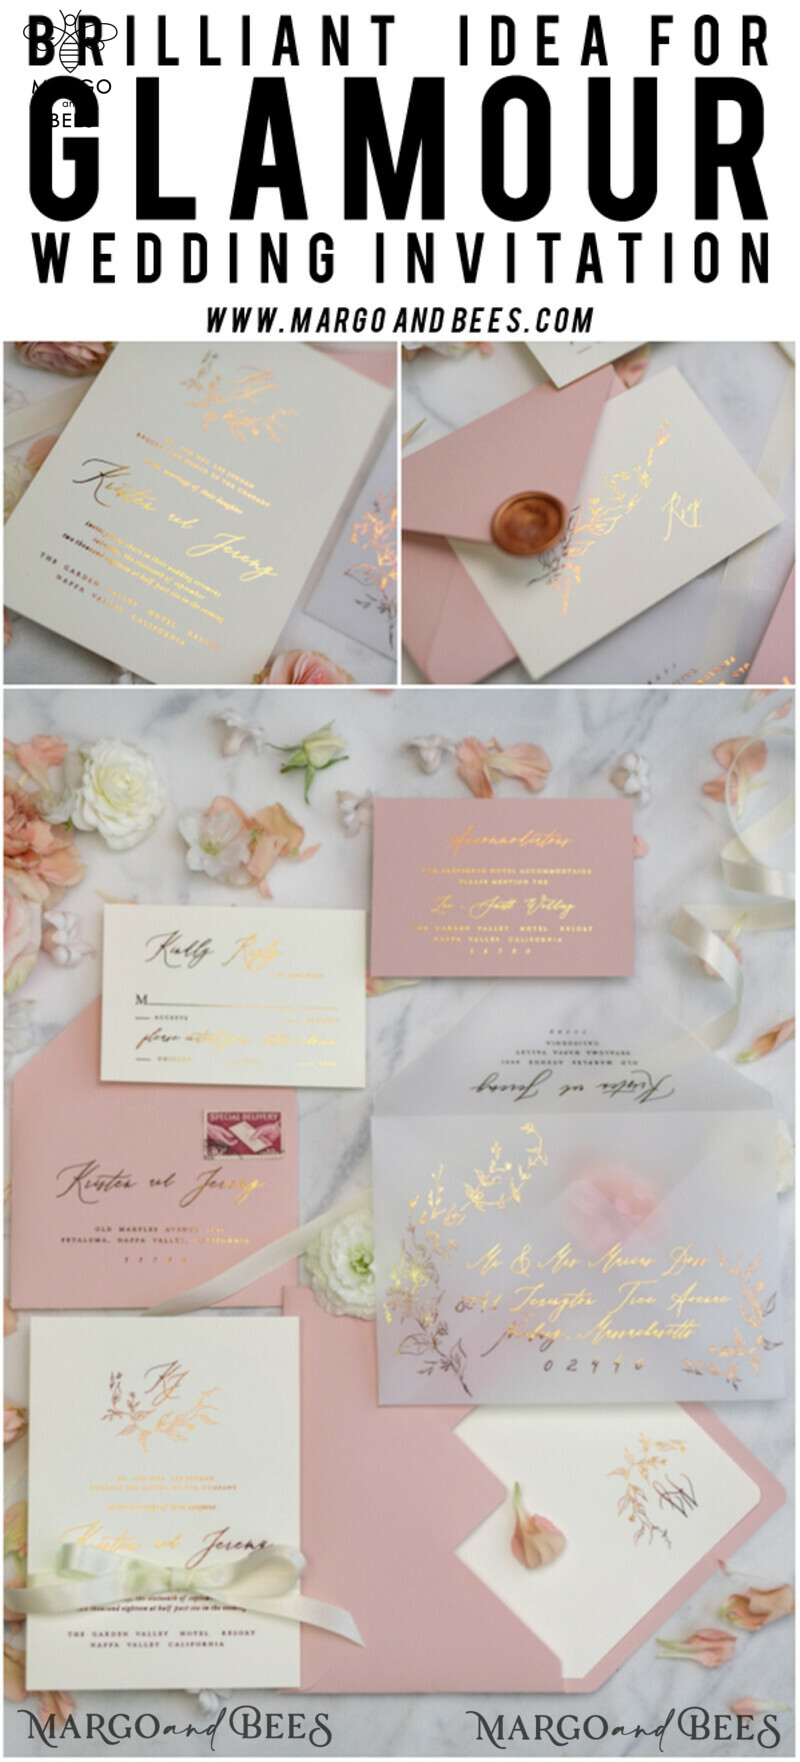 Bespoke Vellum Wedding Invitation Suite: Romantic Blush Pink and Glamour Gold Foil for an Elegant Golden Affair-42